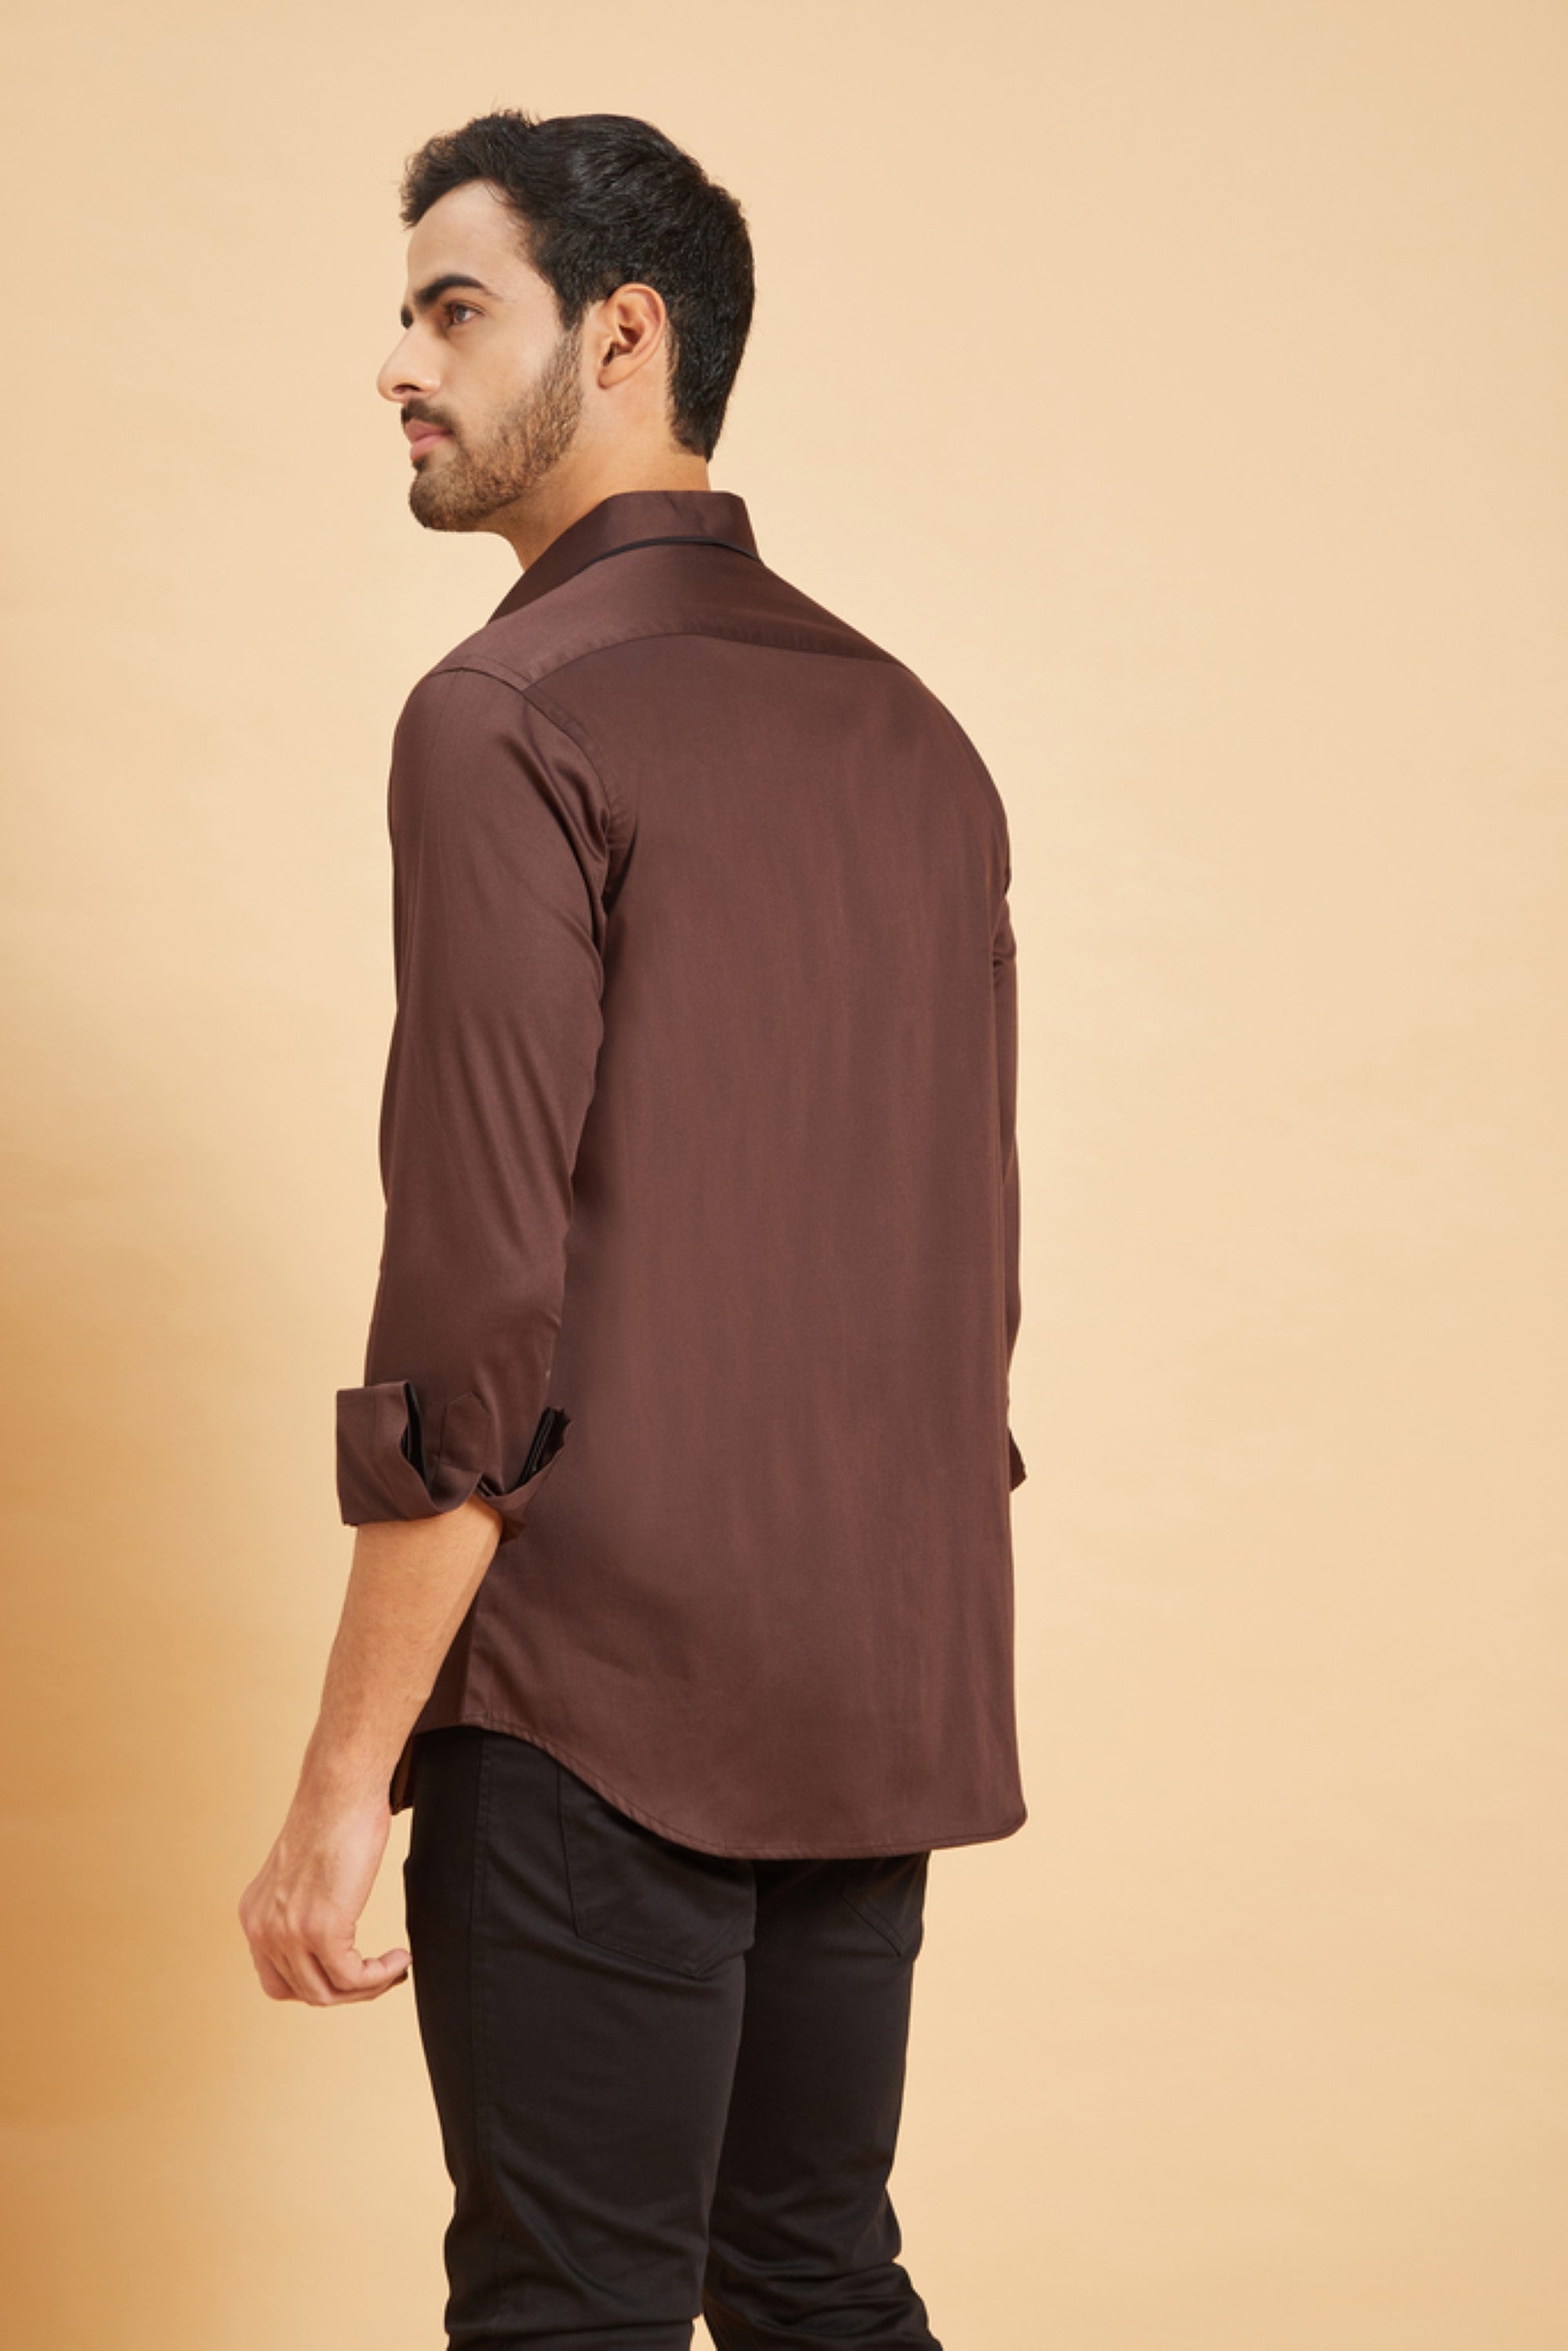 Men's Brown Color Brunette Pattern Shirt Full Sleeves Casual Shirt - Hilo Design